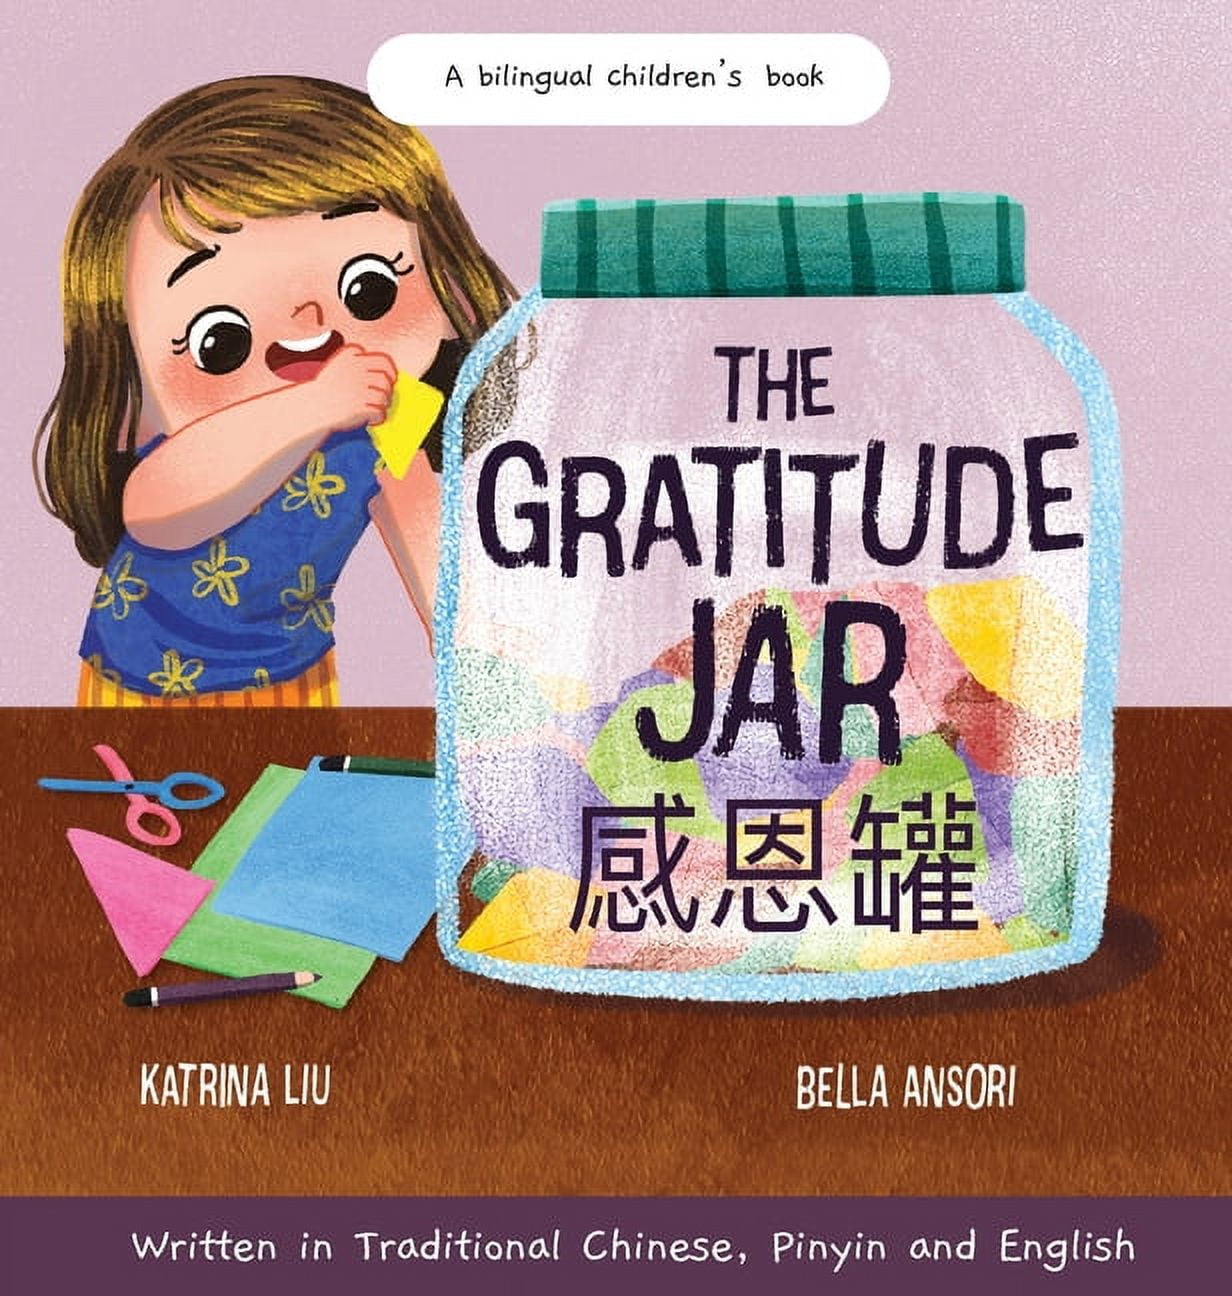 Gratitude: A Way of Life [Book]